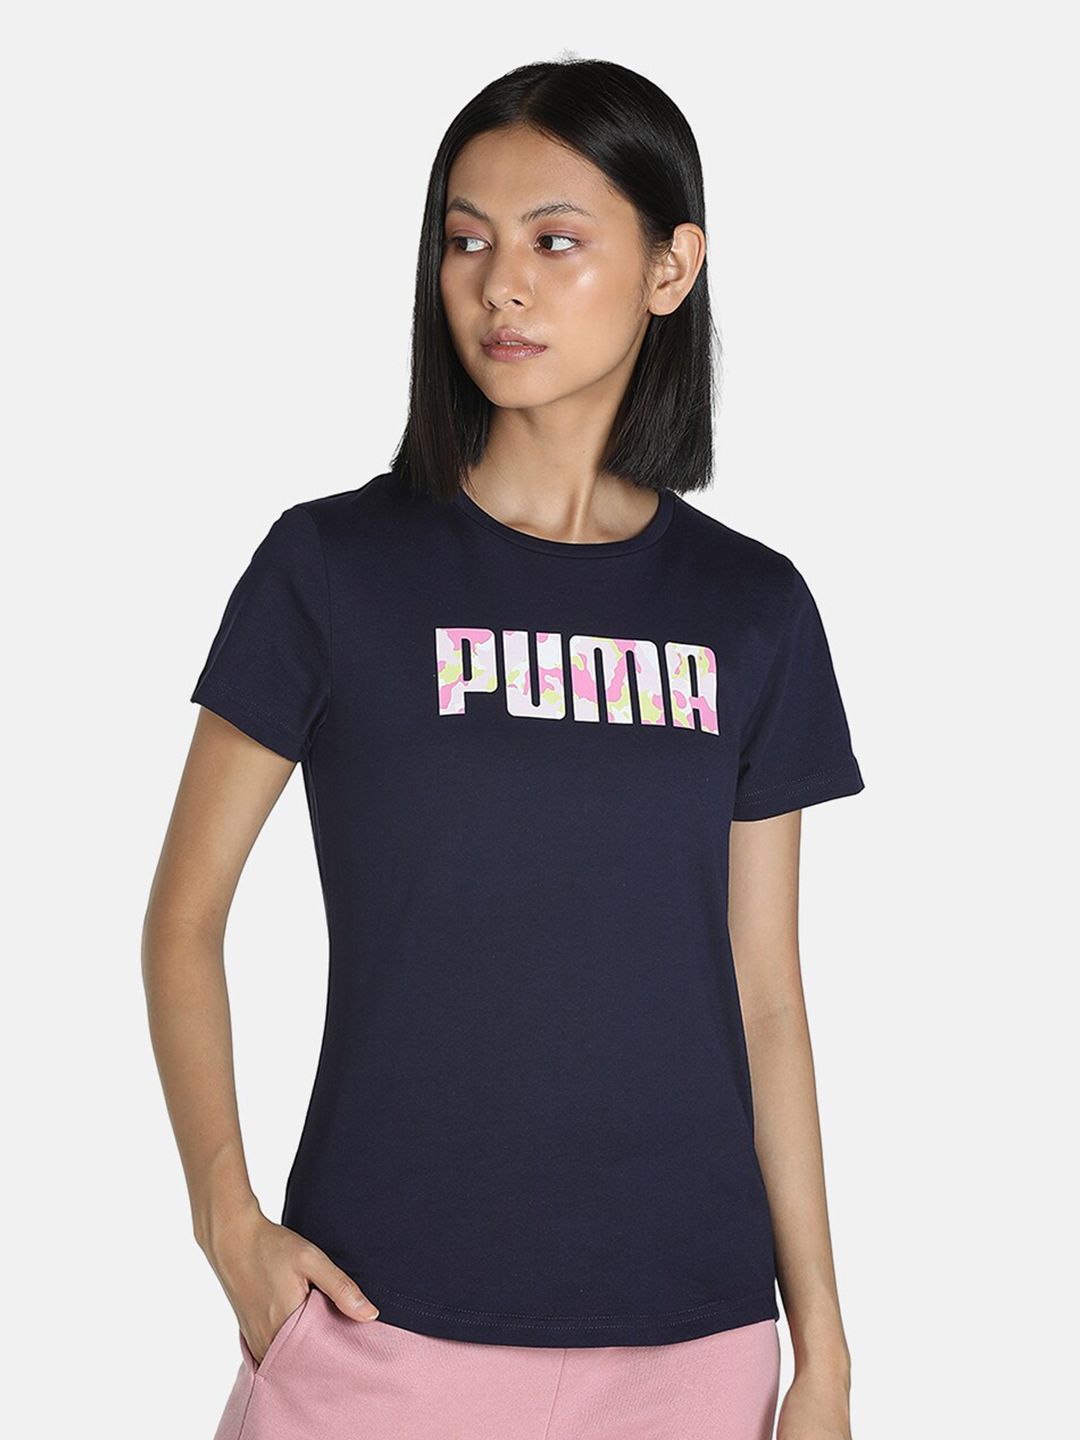 Puma Women Navy Blue & White Brand Logo Printed Regular Fit Cotton T-shirt Price in India